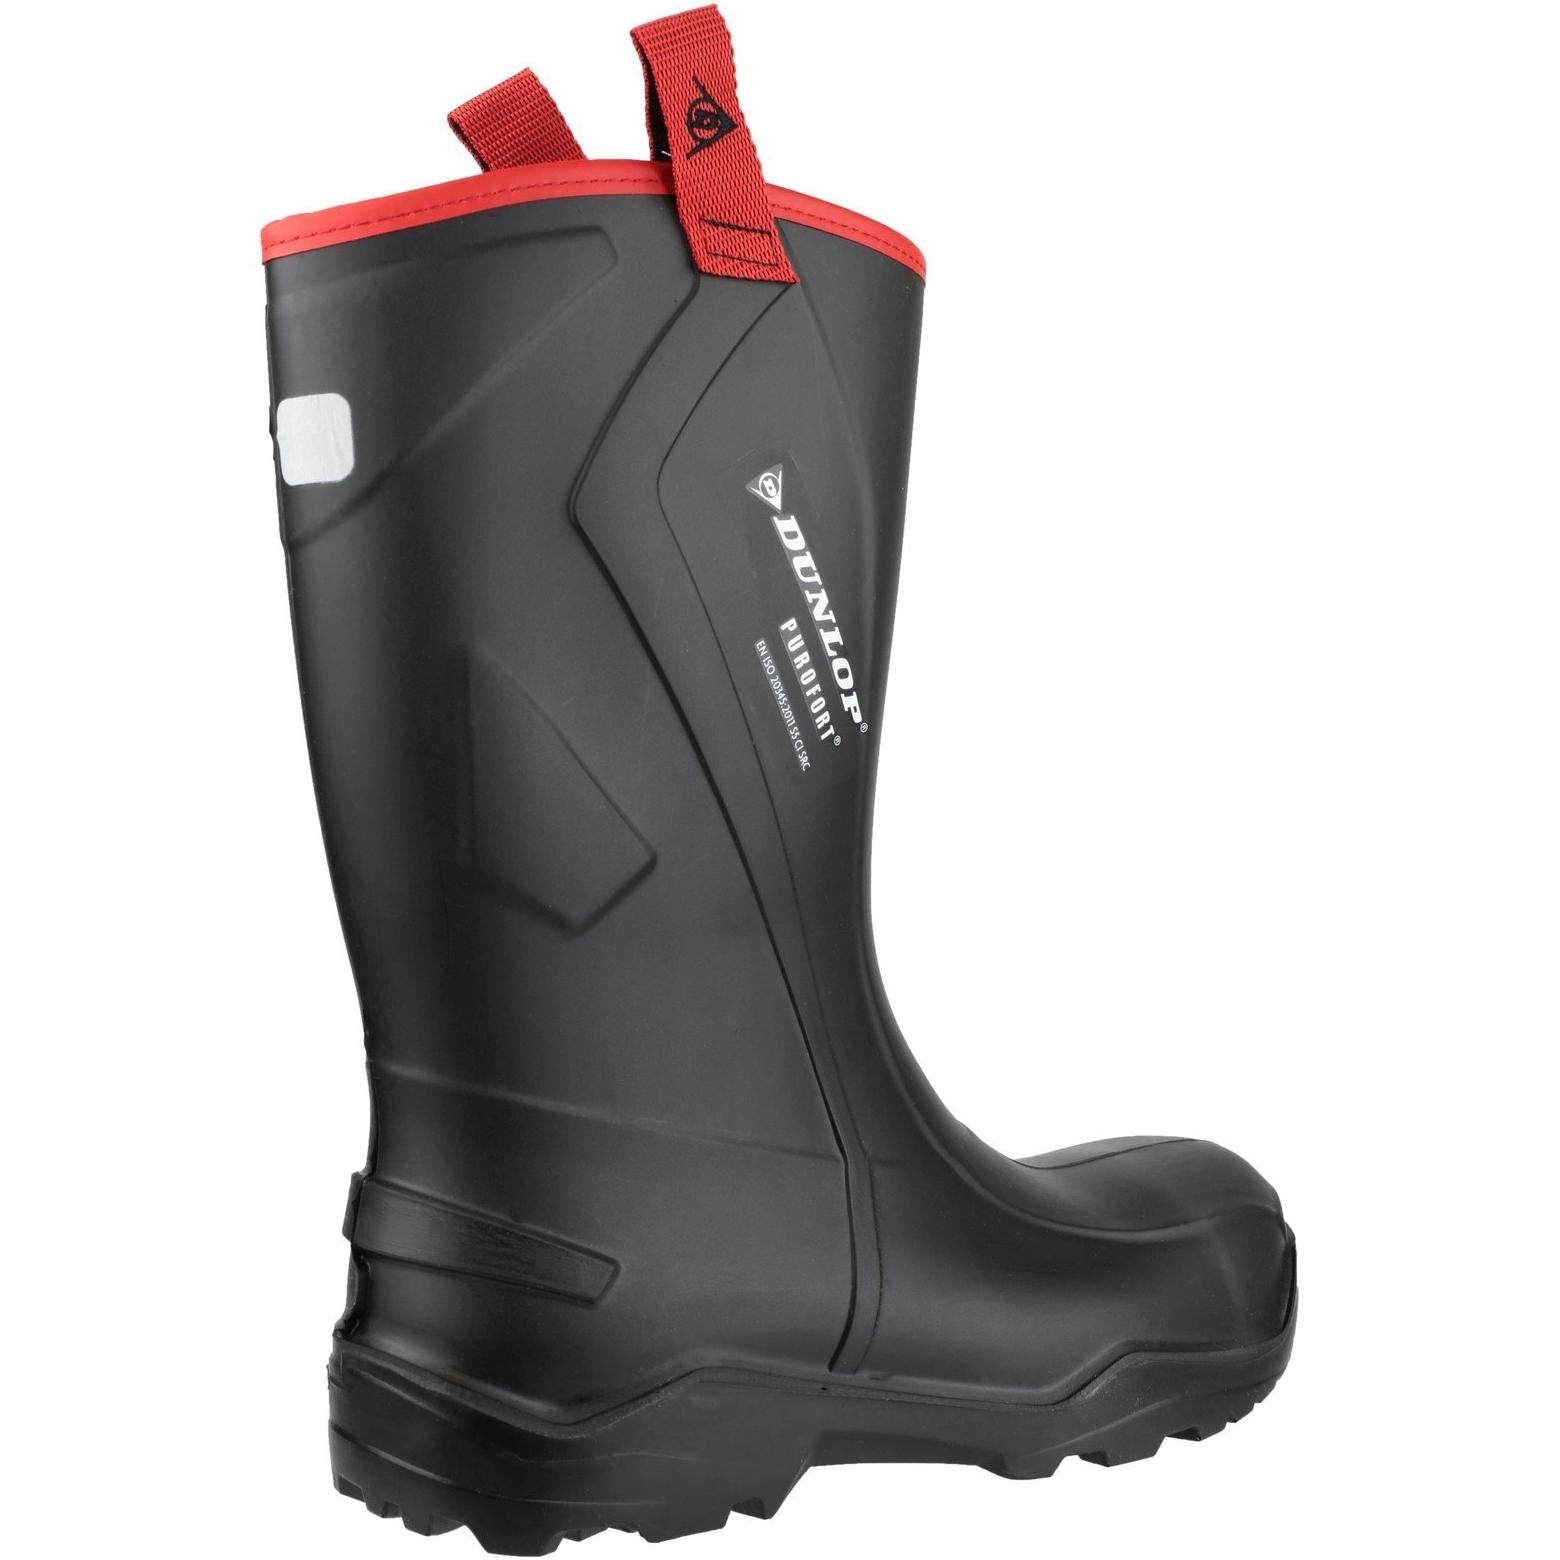 Dunlop Purofort+ Rugged Full Safety Wellingtons Boots